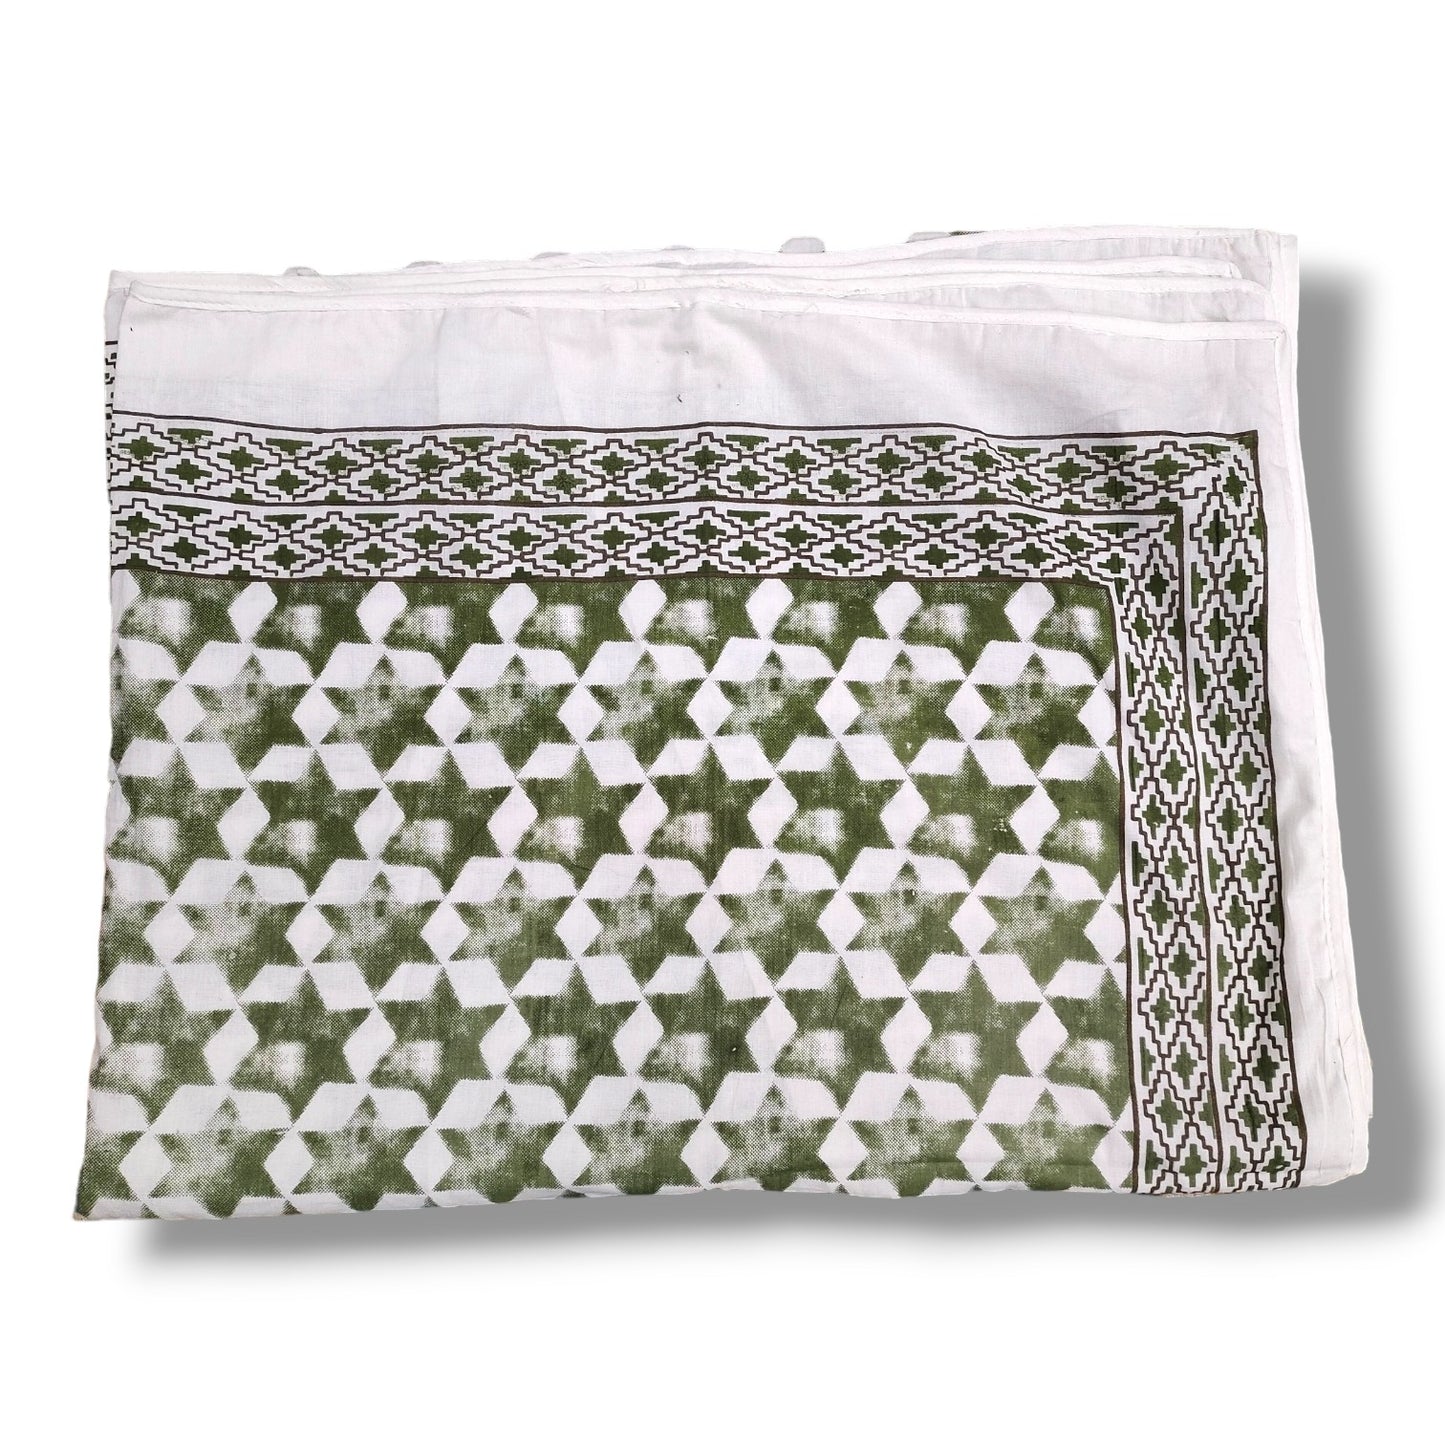 Malmal AC Quilt/Dohar-Starry green -Single Bed